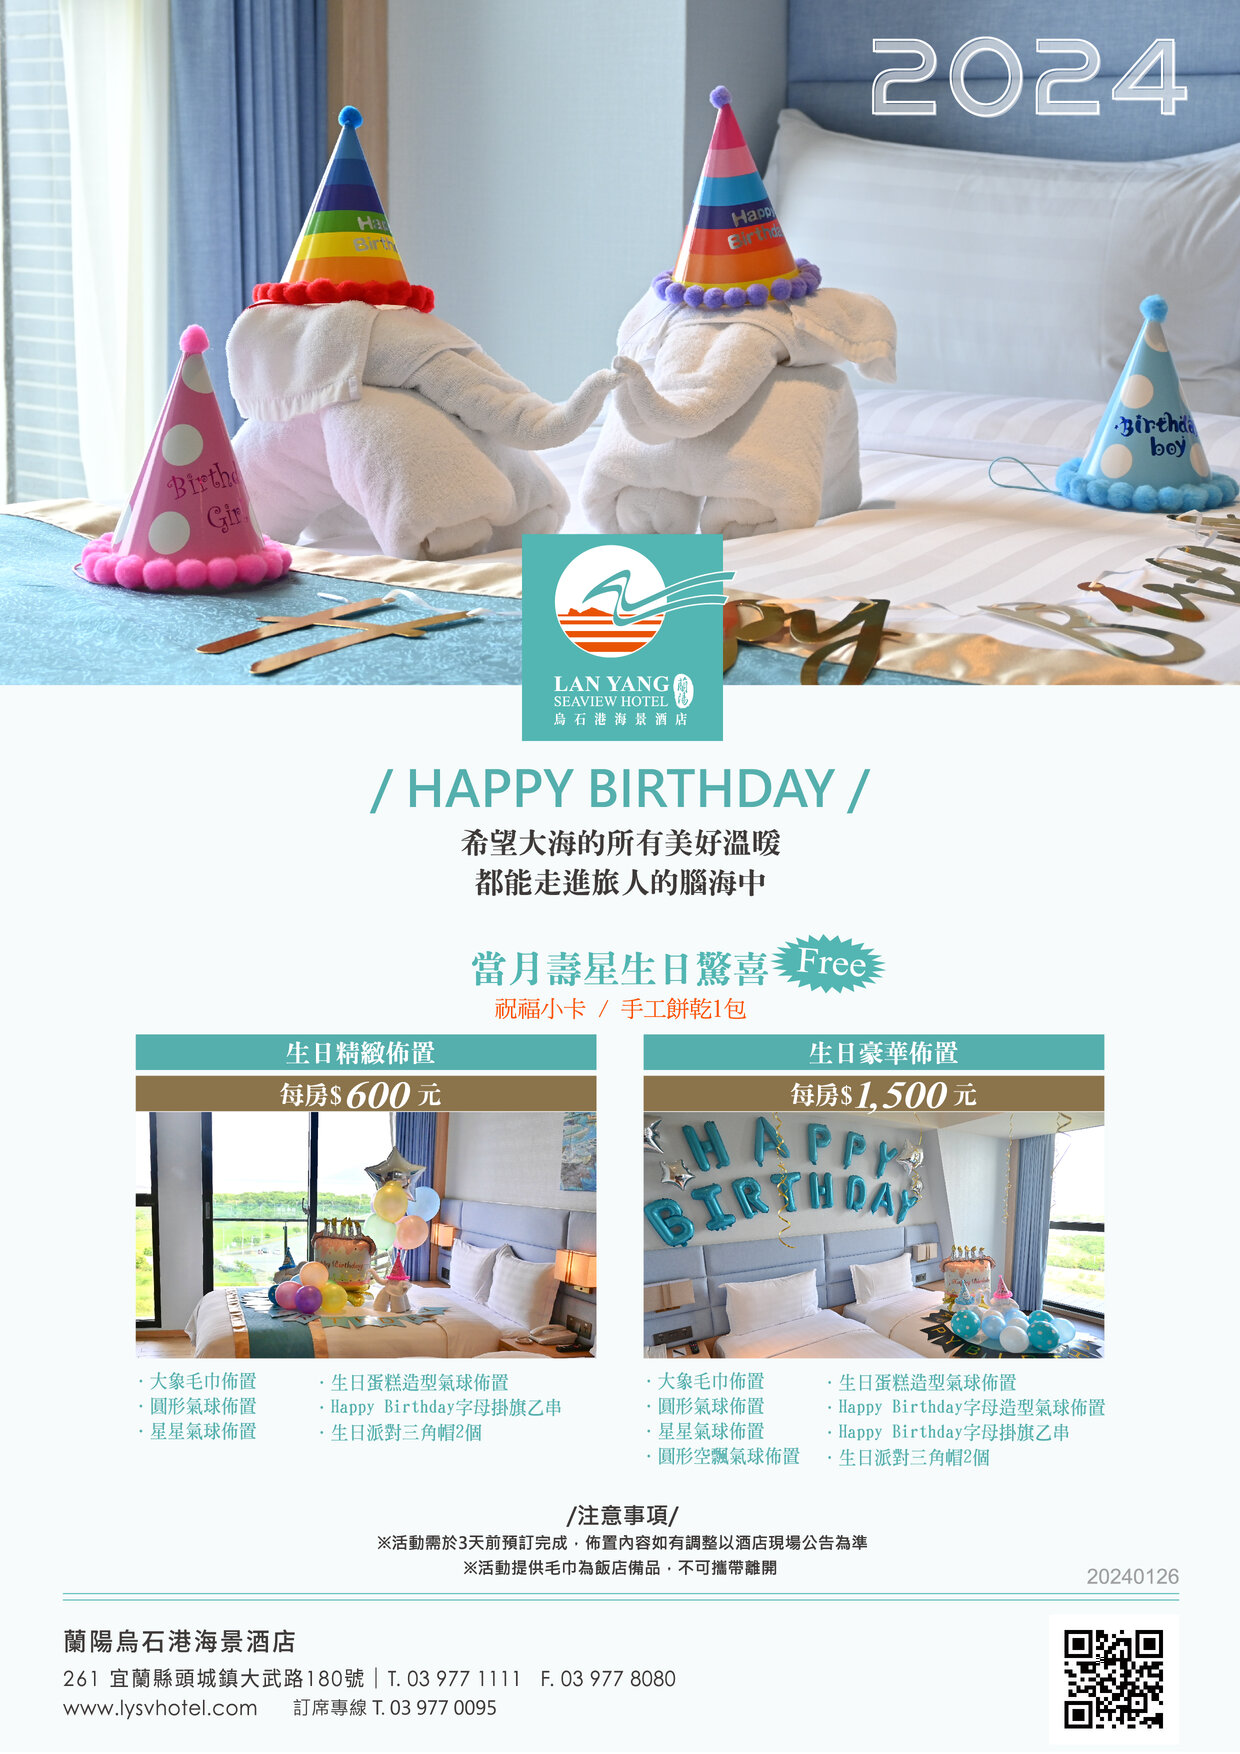 2024-蘭陽烏石港海景酒店-Happy Birthday